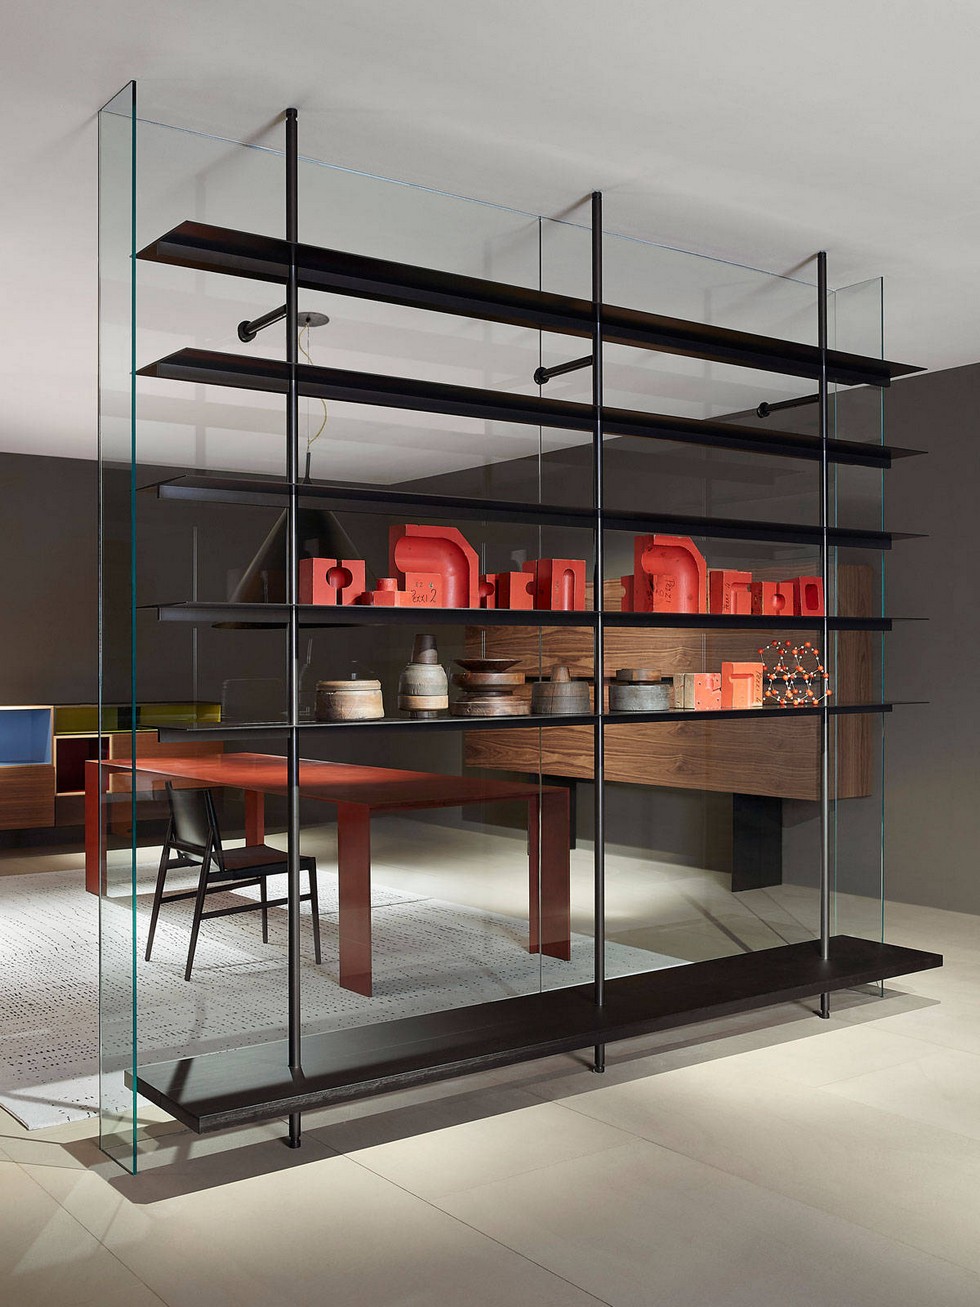 Famous interior designers – Piero Lissoni versatile collection for Porro (2)